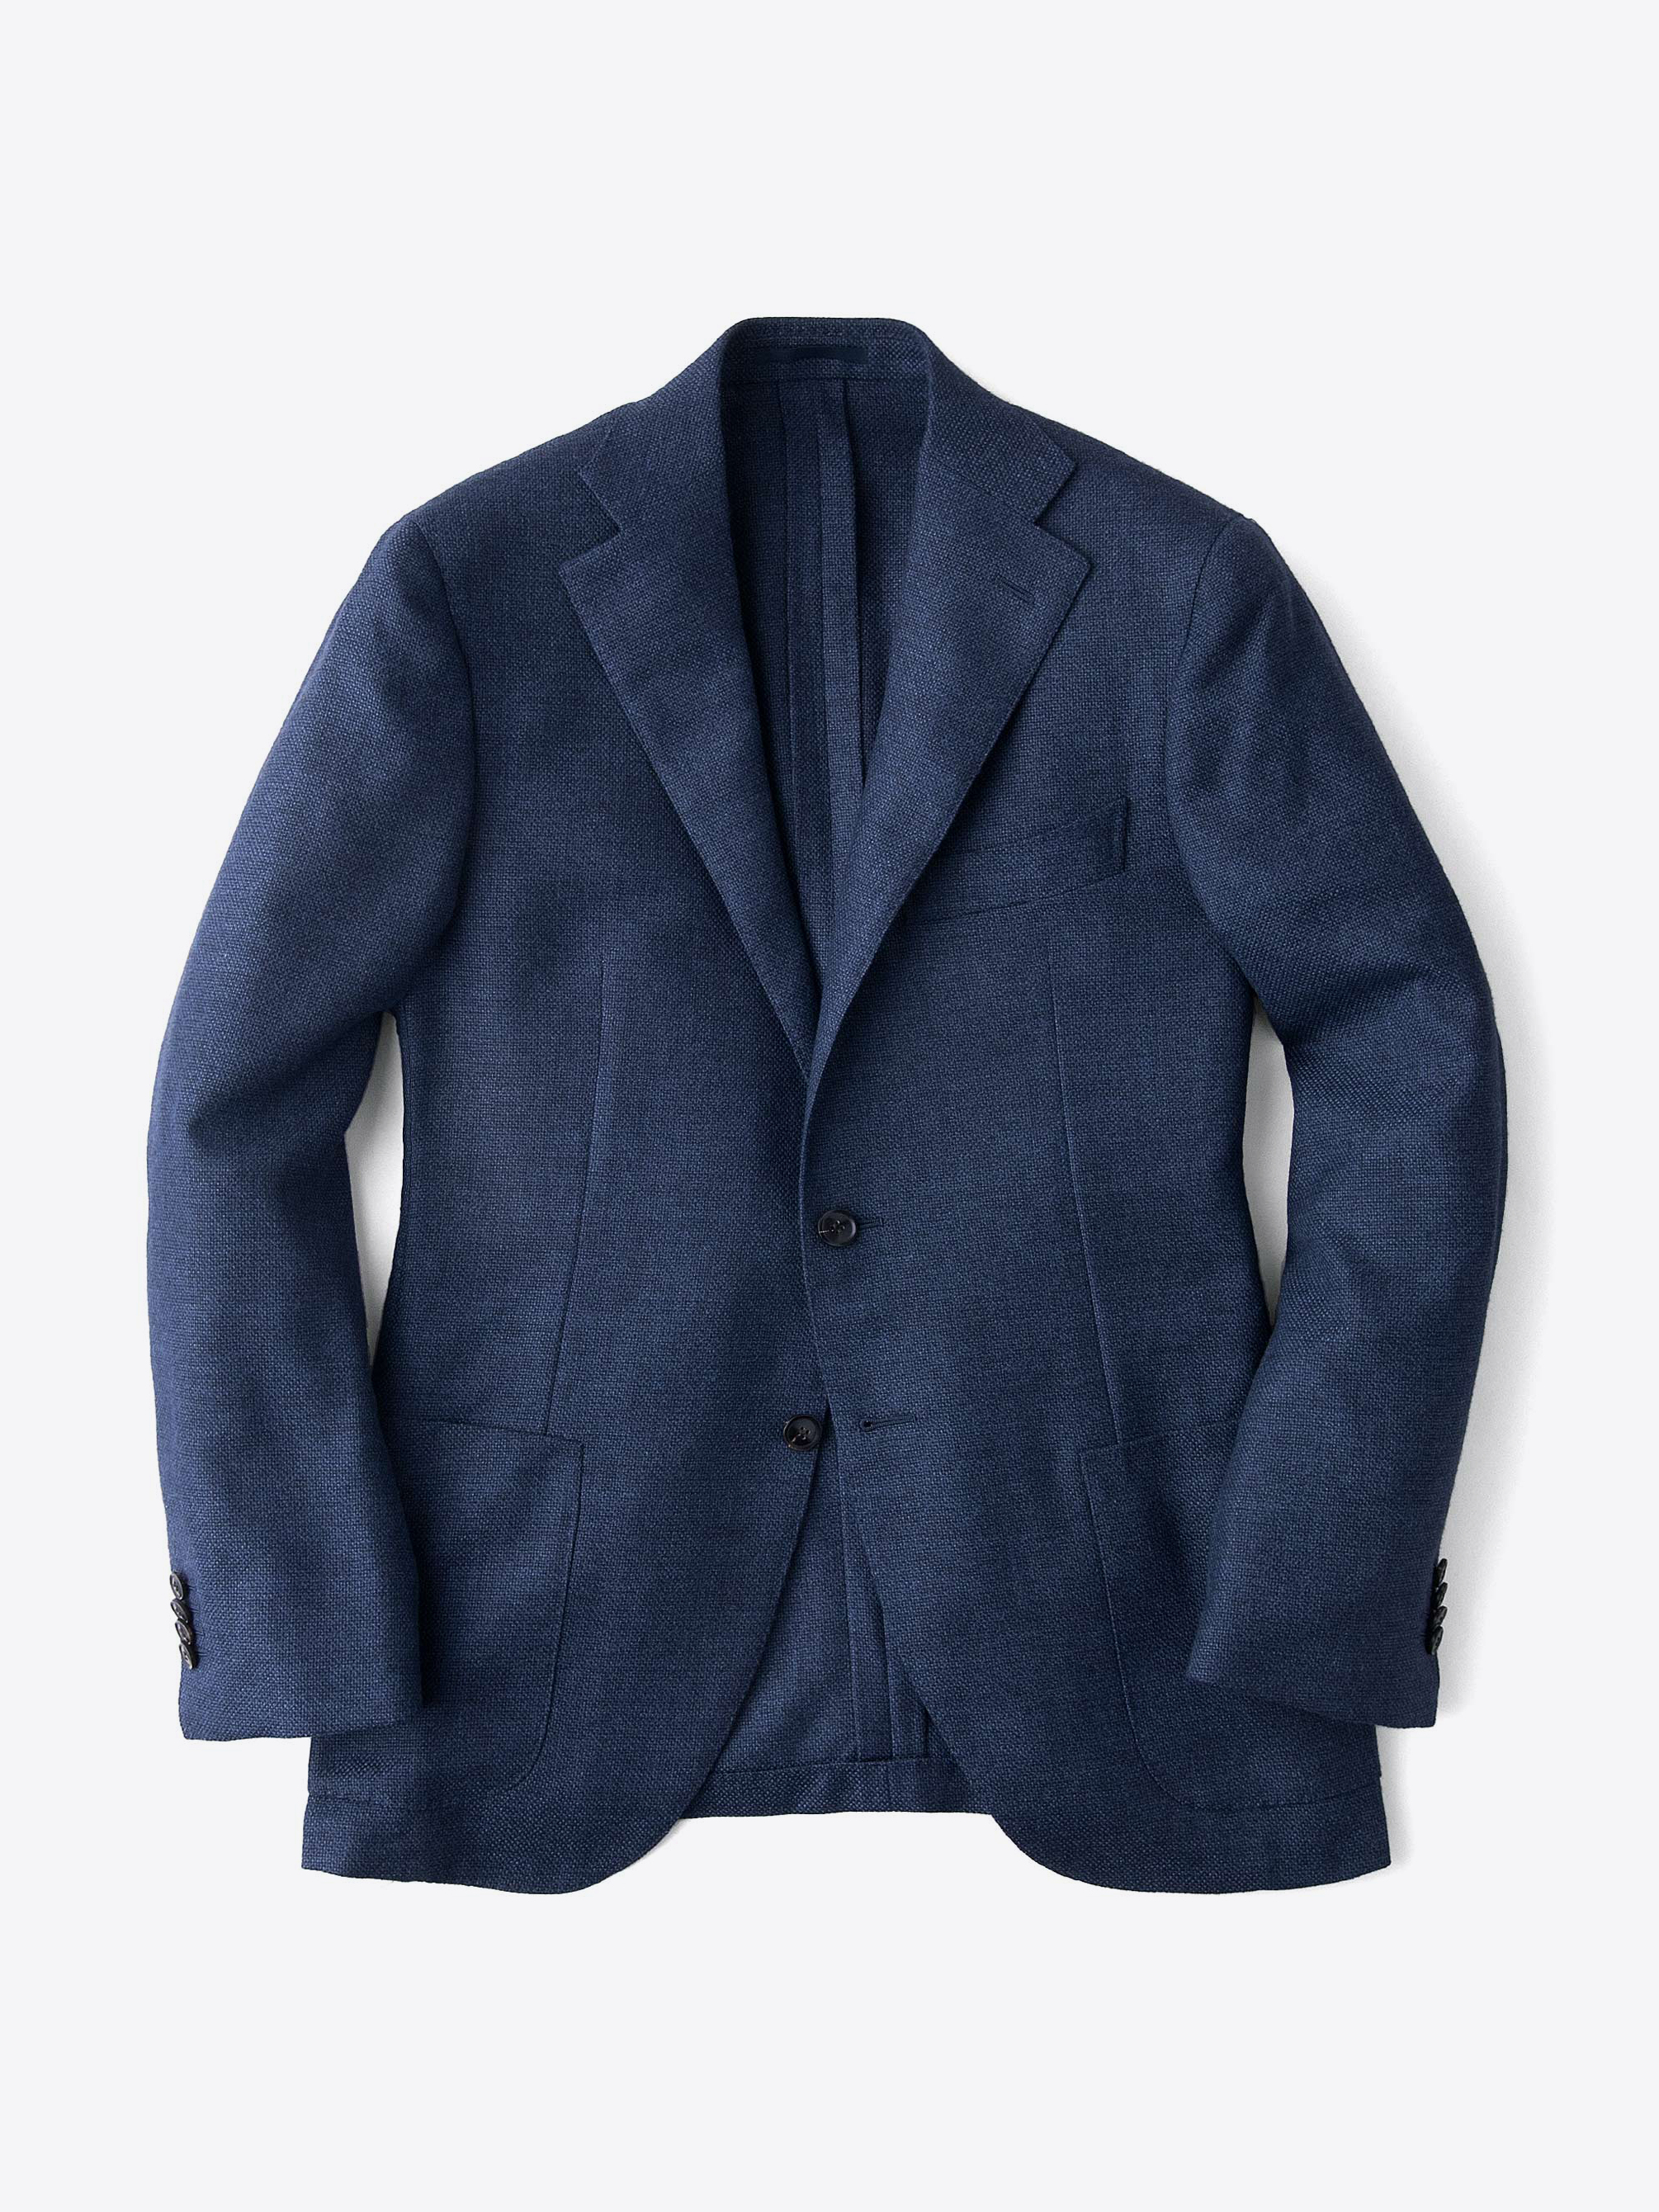 Zoom Image of Ocean Wool Cashmere Basketweave Hudson Jacket